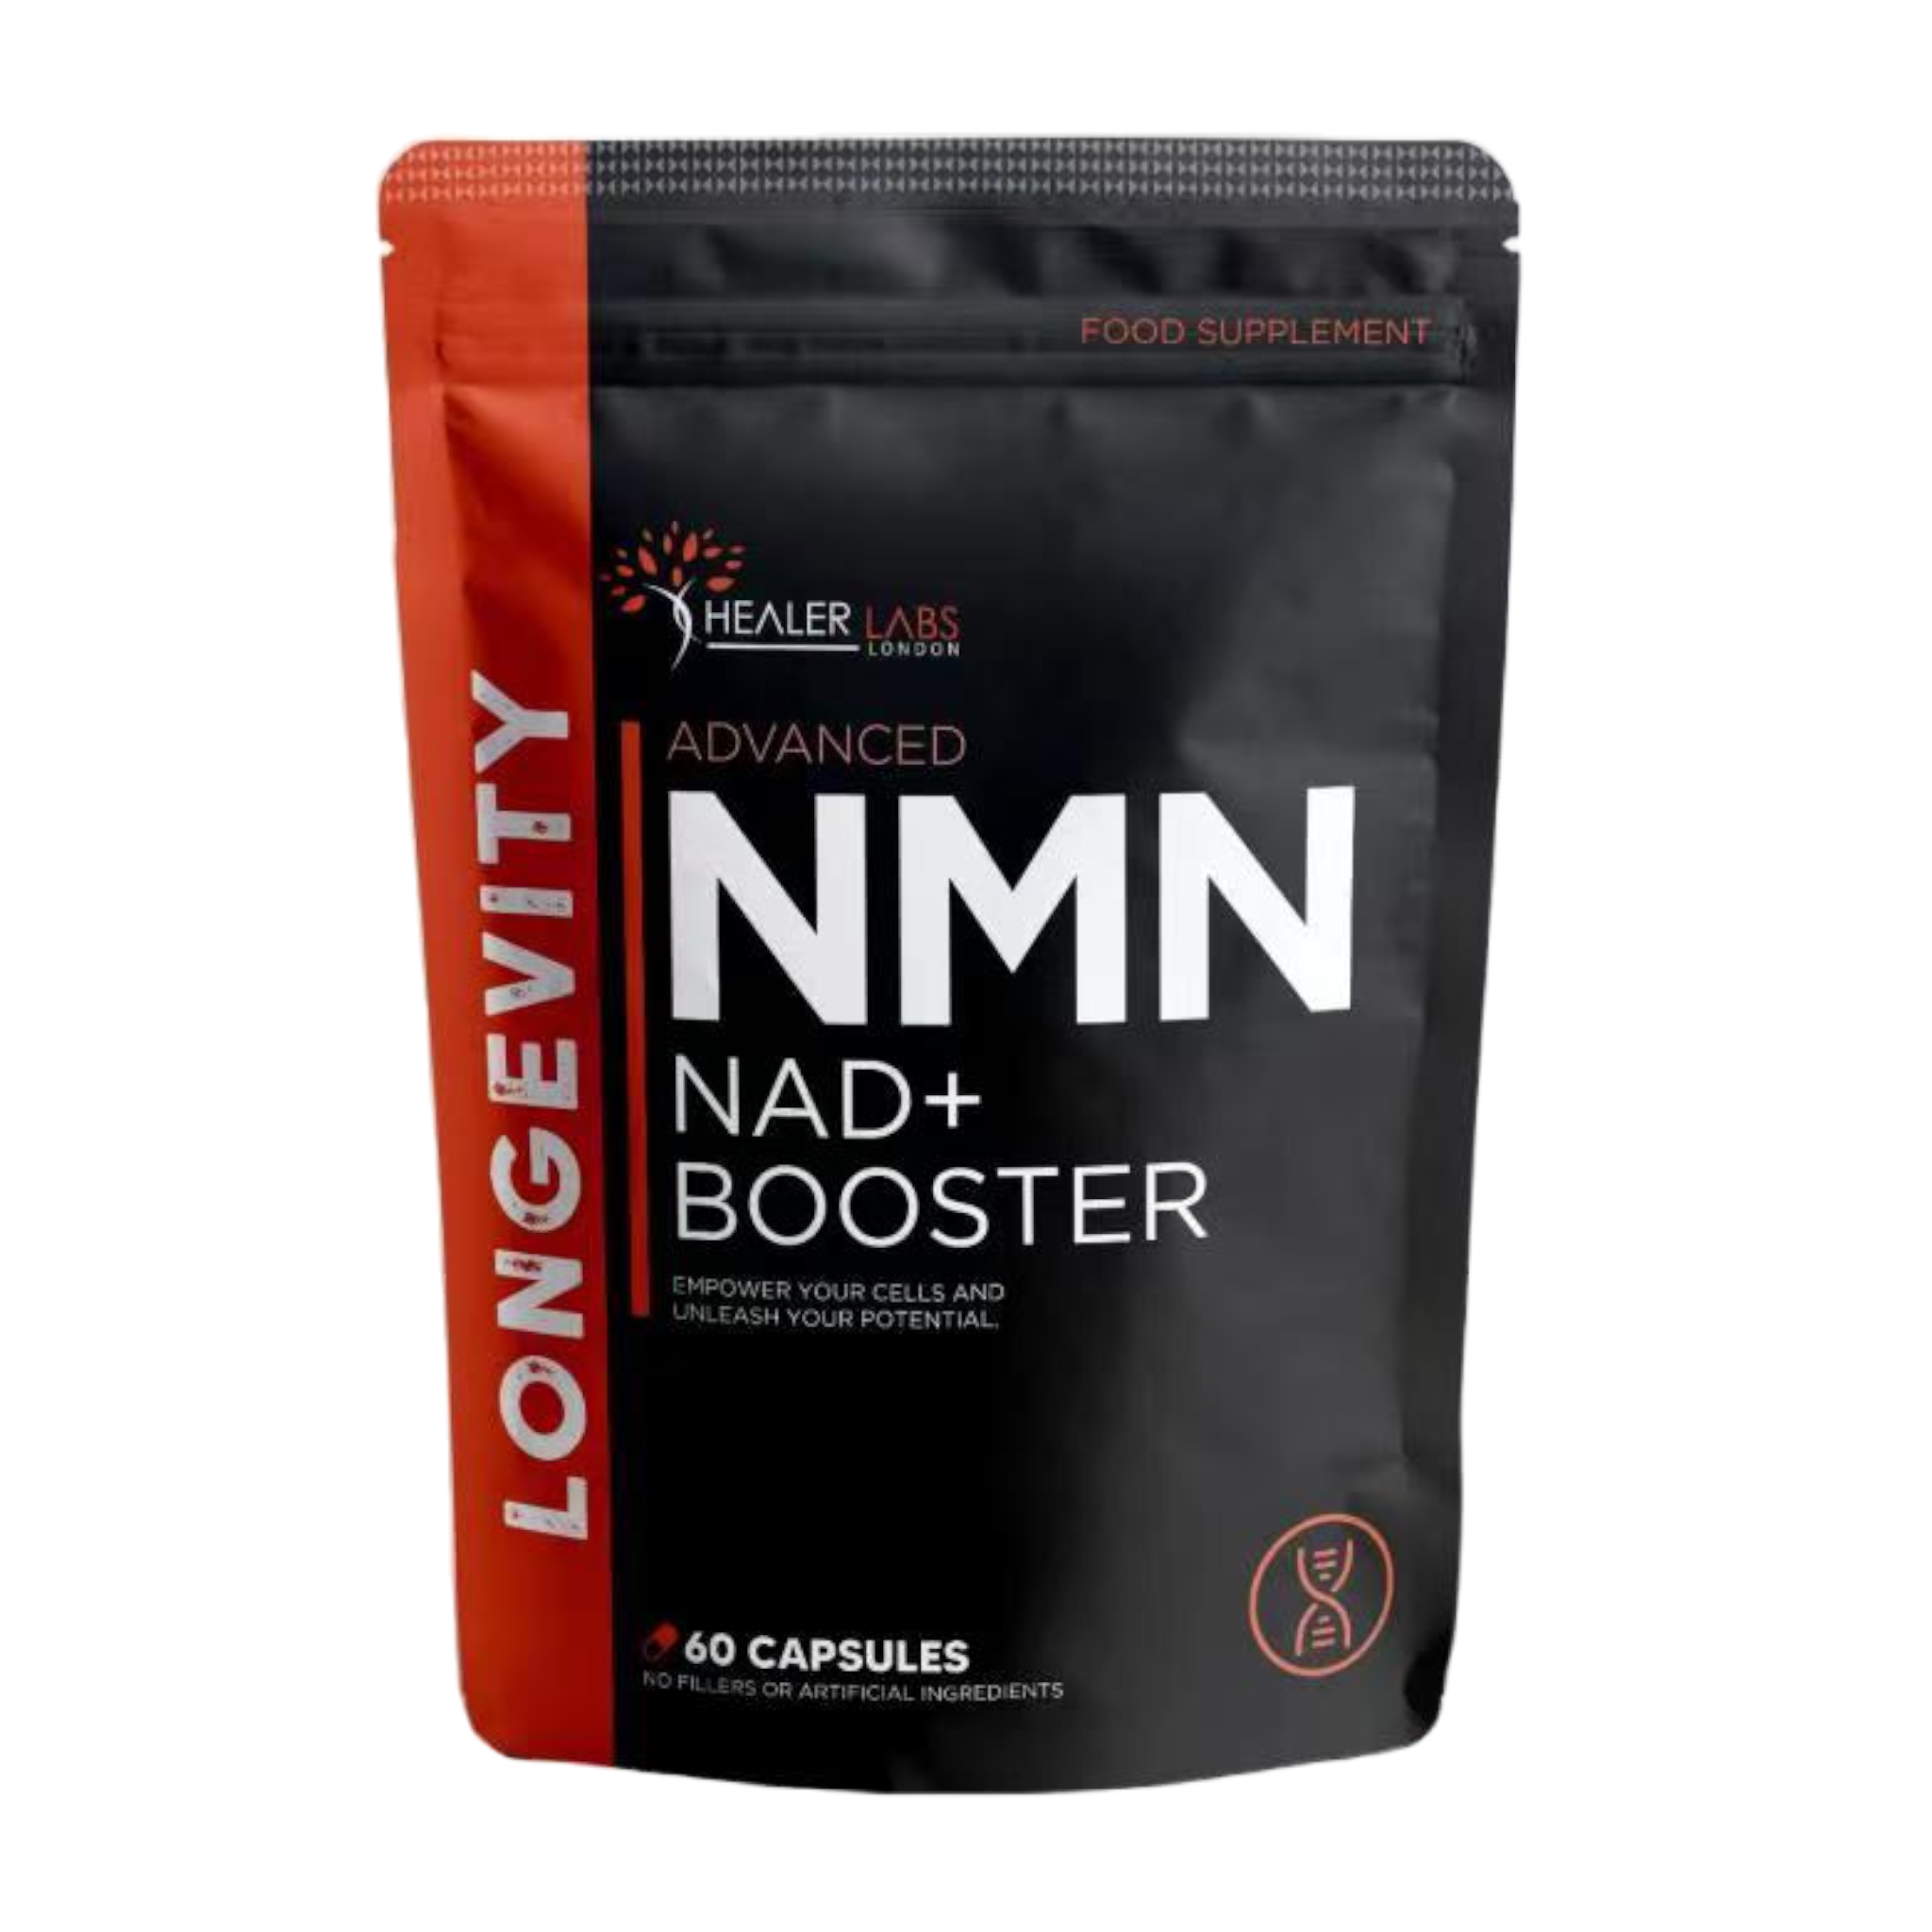 NMN Nad+ Booster 500mg